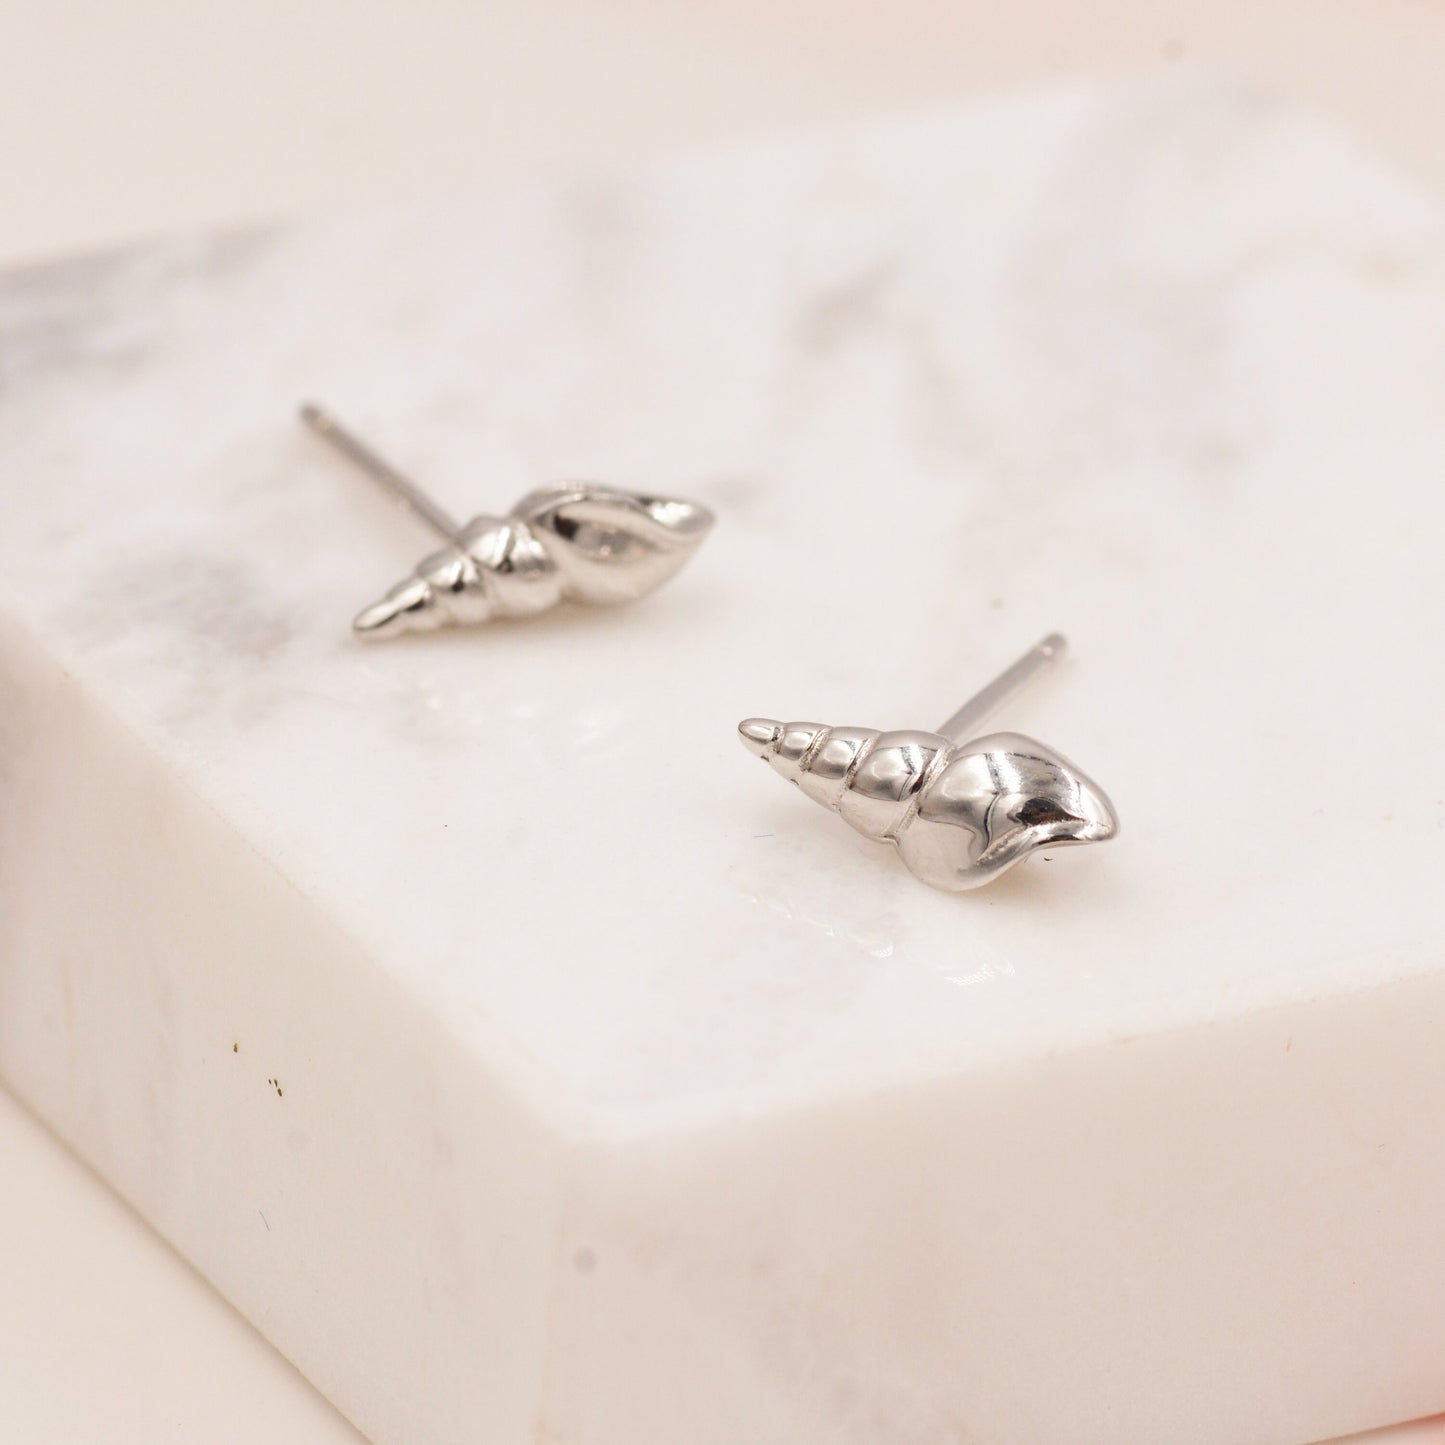 Seashell Earrings in Sterling Silver - Petite Auger Shell Stud - Pointy Shell - Sea, Ocean, Cute,  Fun, Whimsical